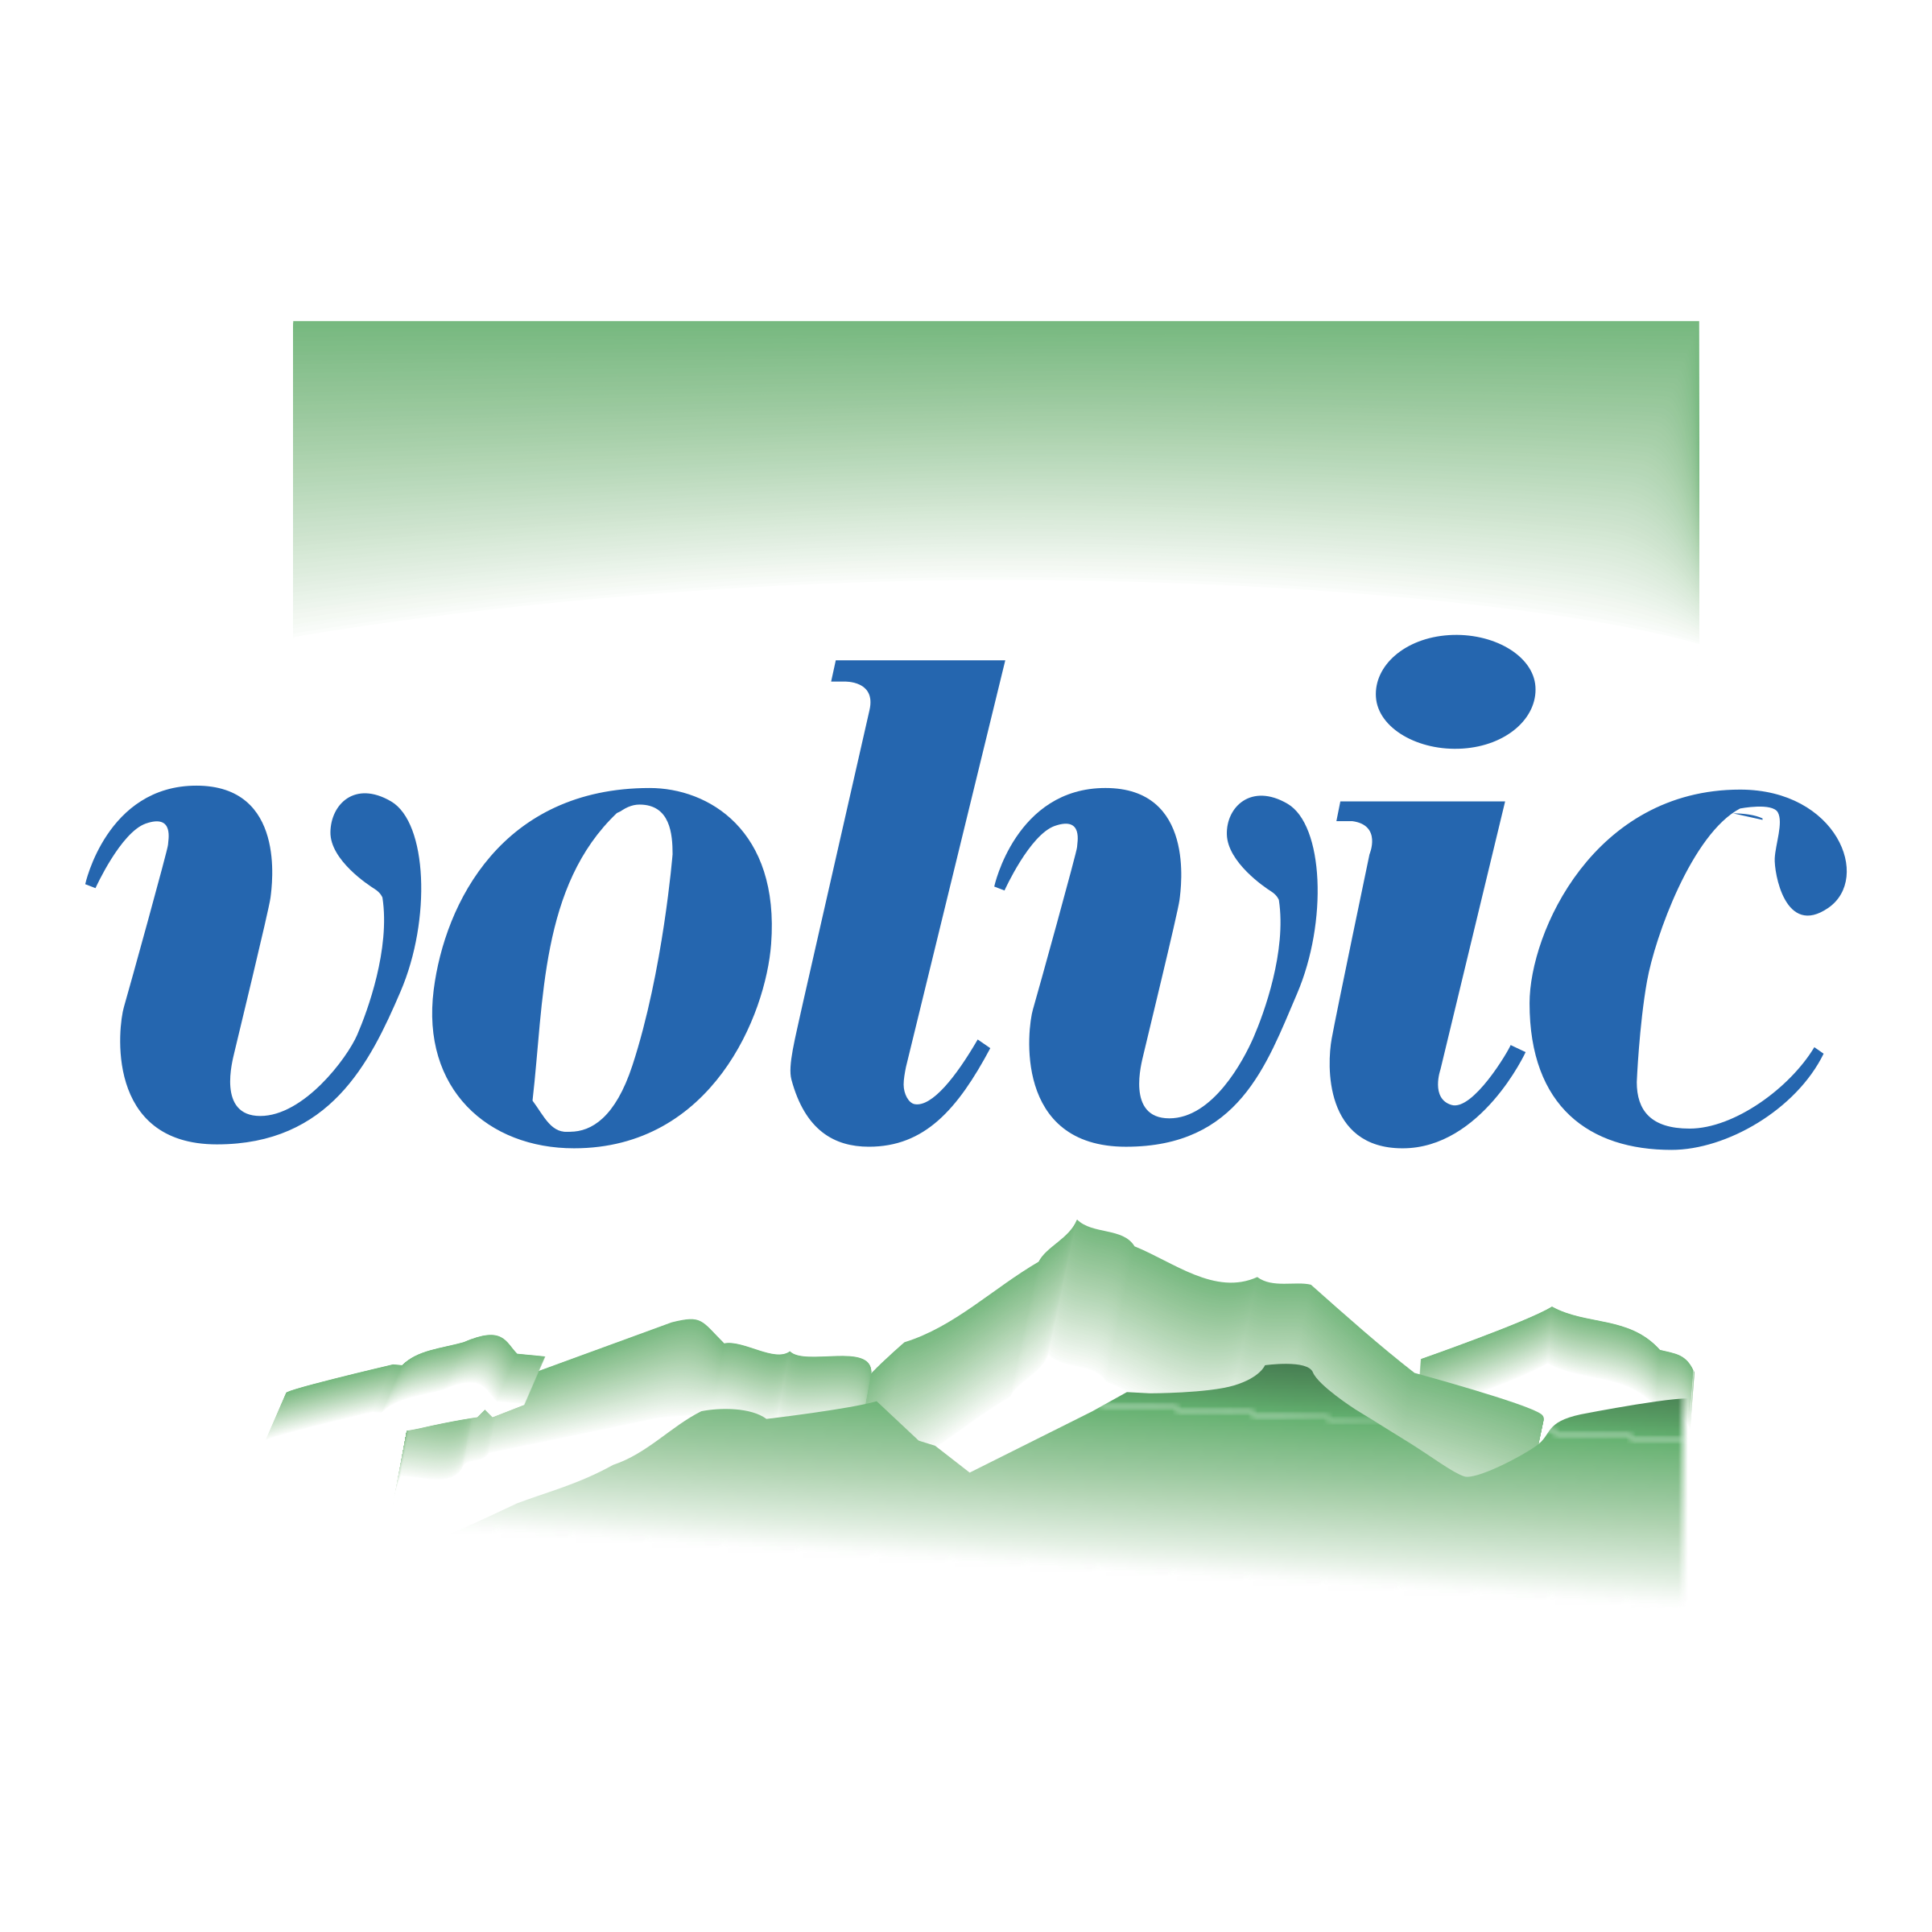 Volvic Logo PNG Transparent & SVG Vector.